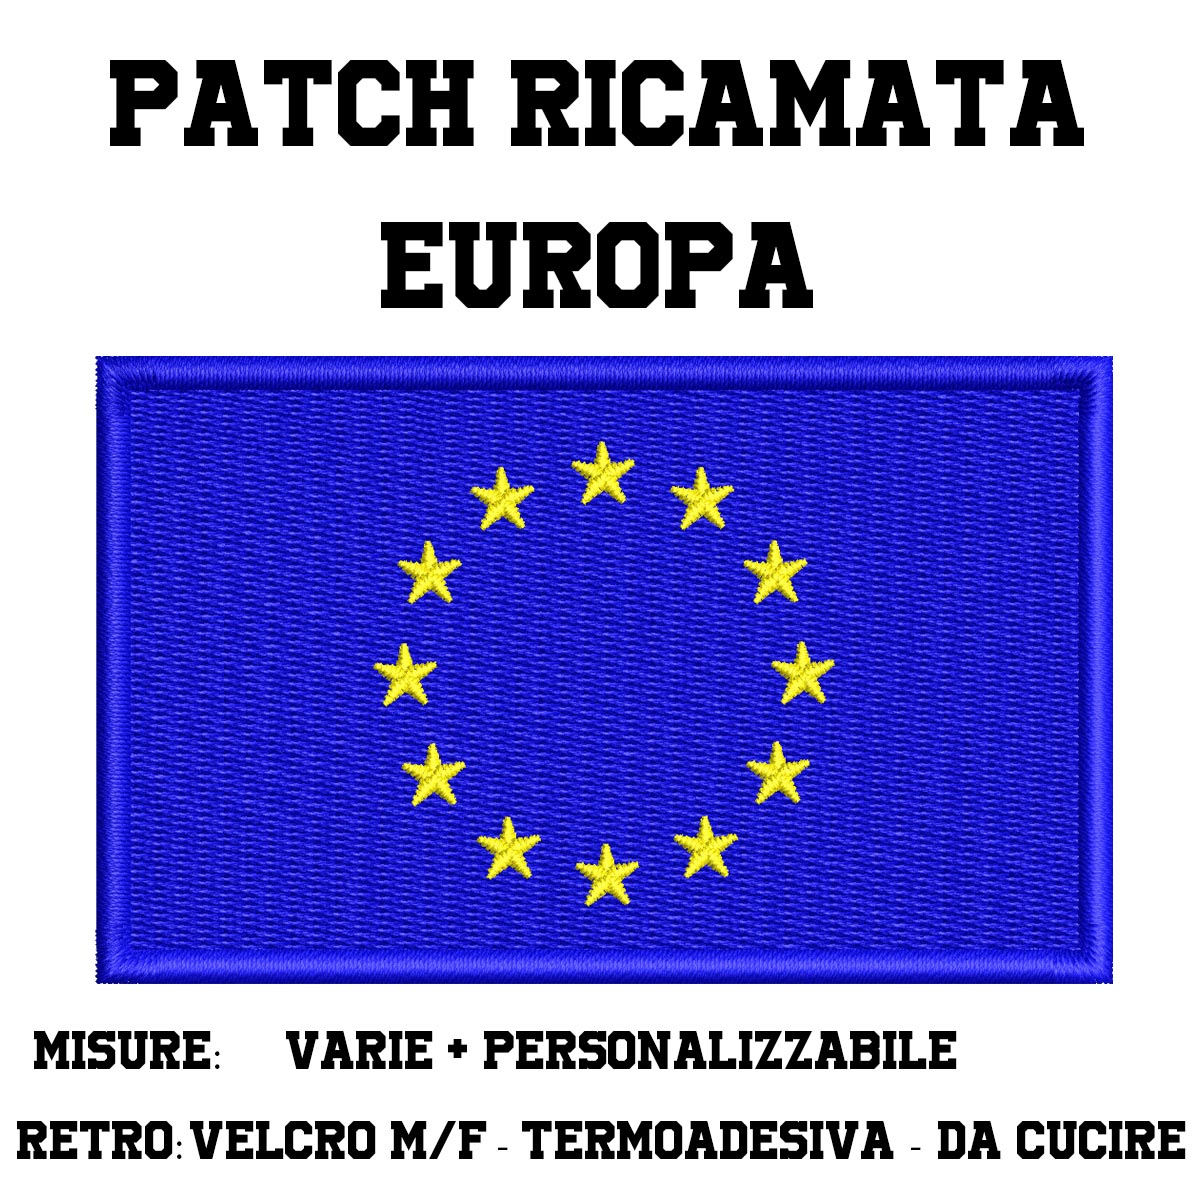 Patch bandiera europea ricamata